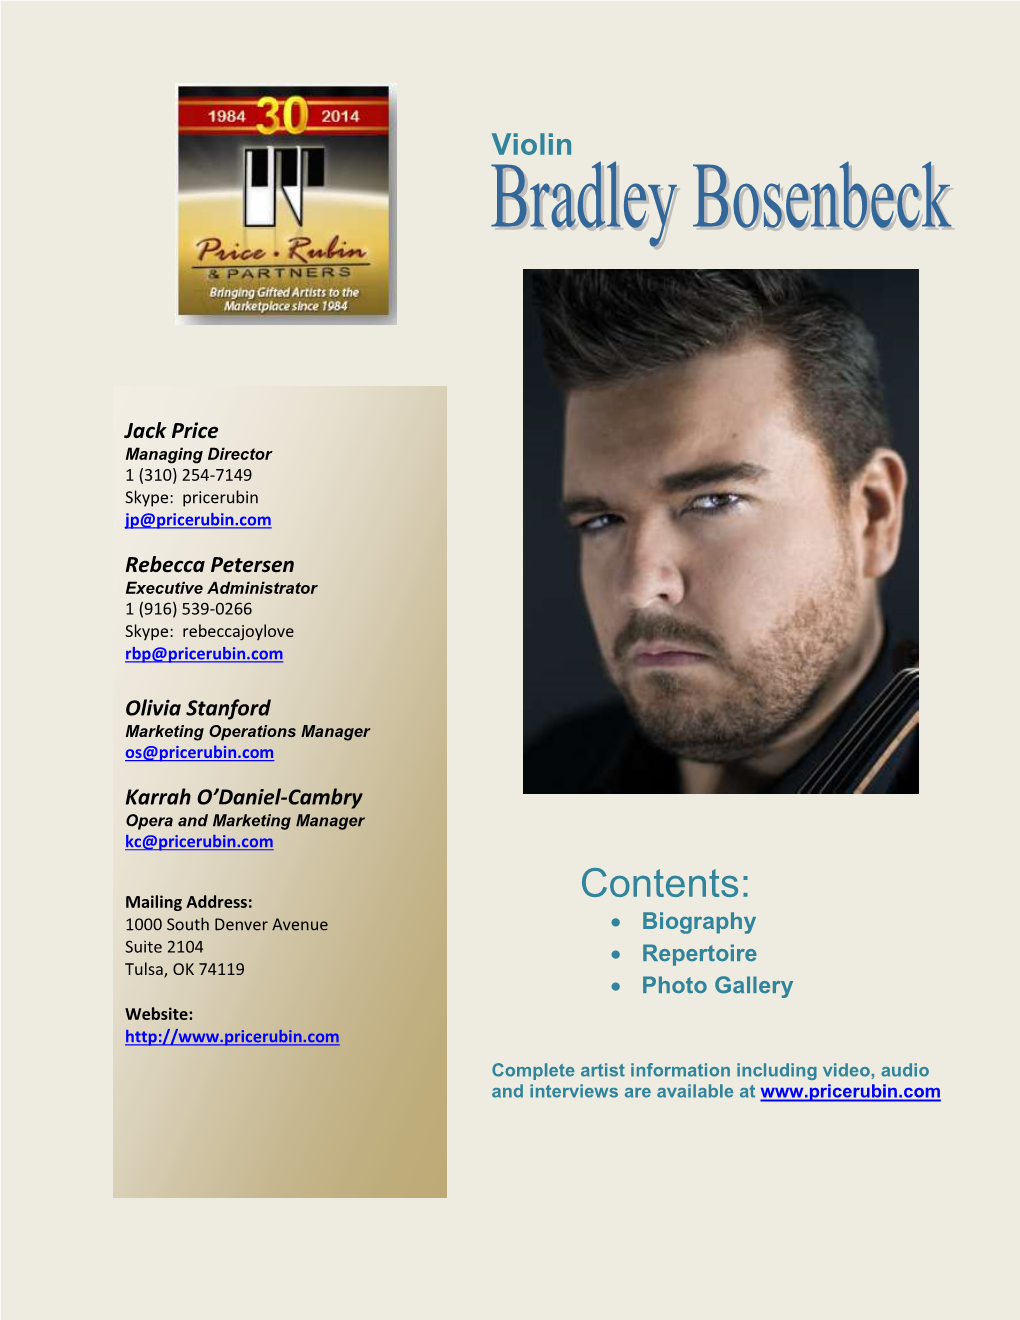 Bradley Bosenbeck – Biography